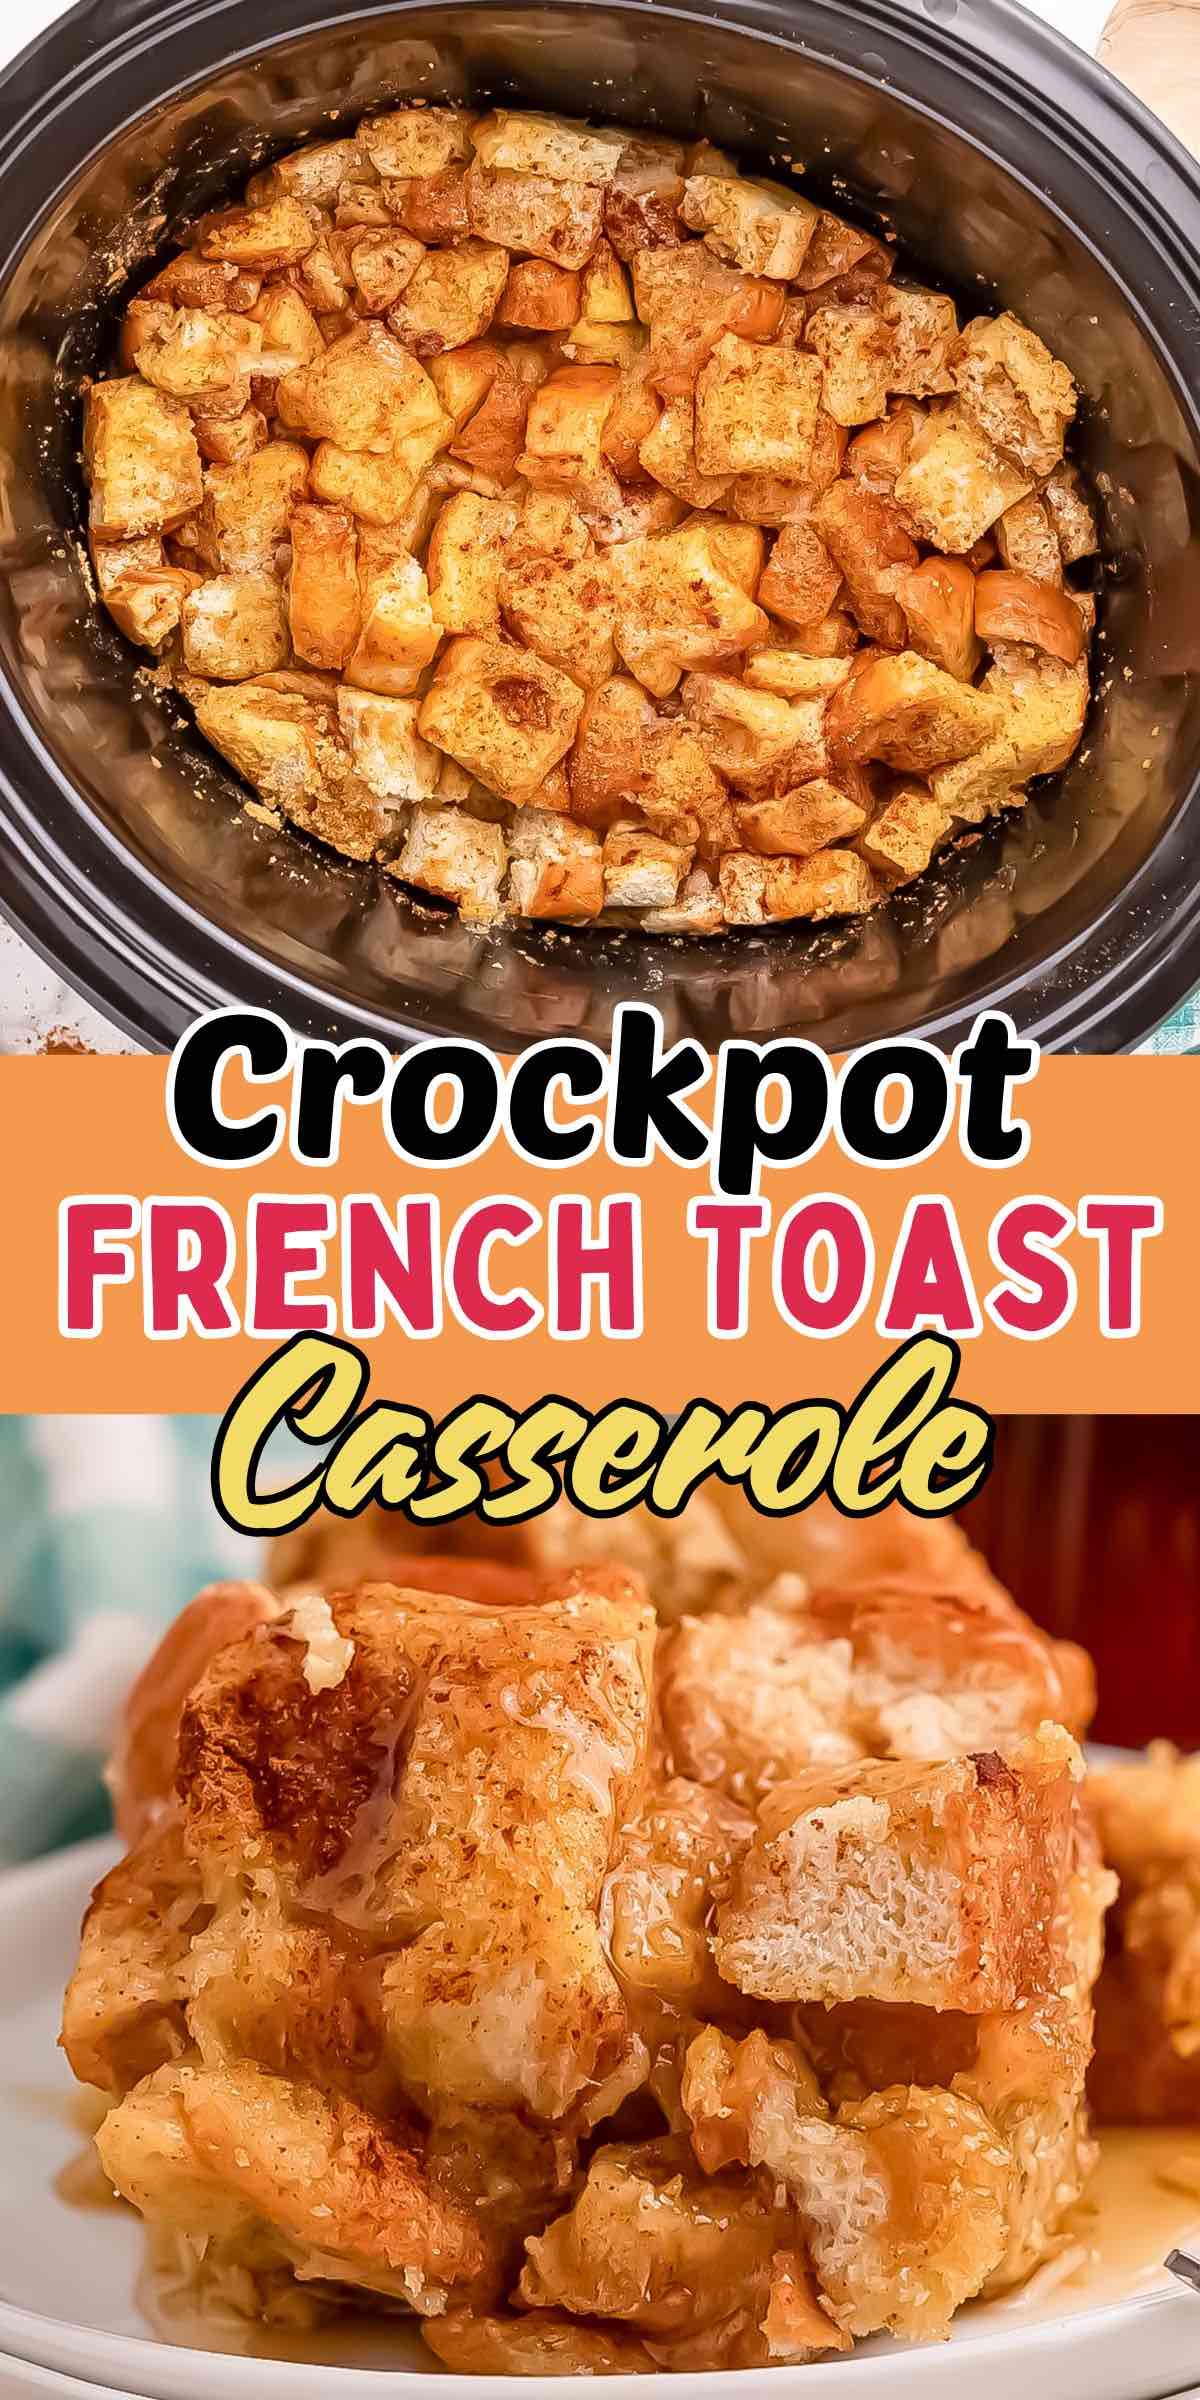 crockpot french toast casserole pins.